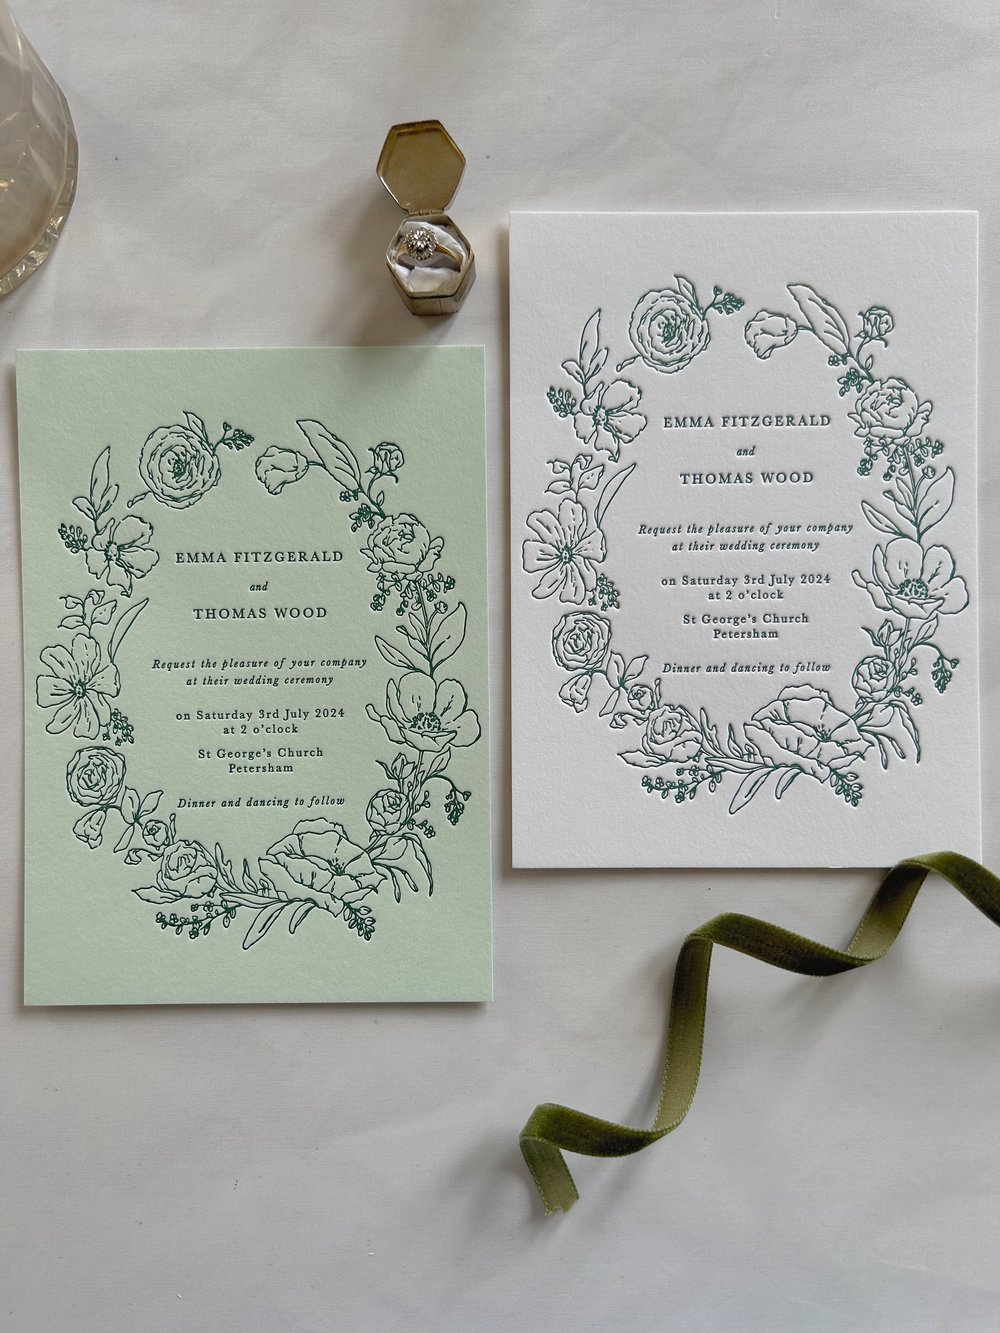 Personalized Wedding Planning book - – Charvoria